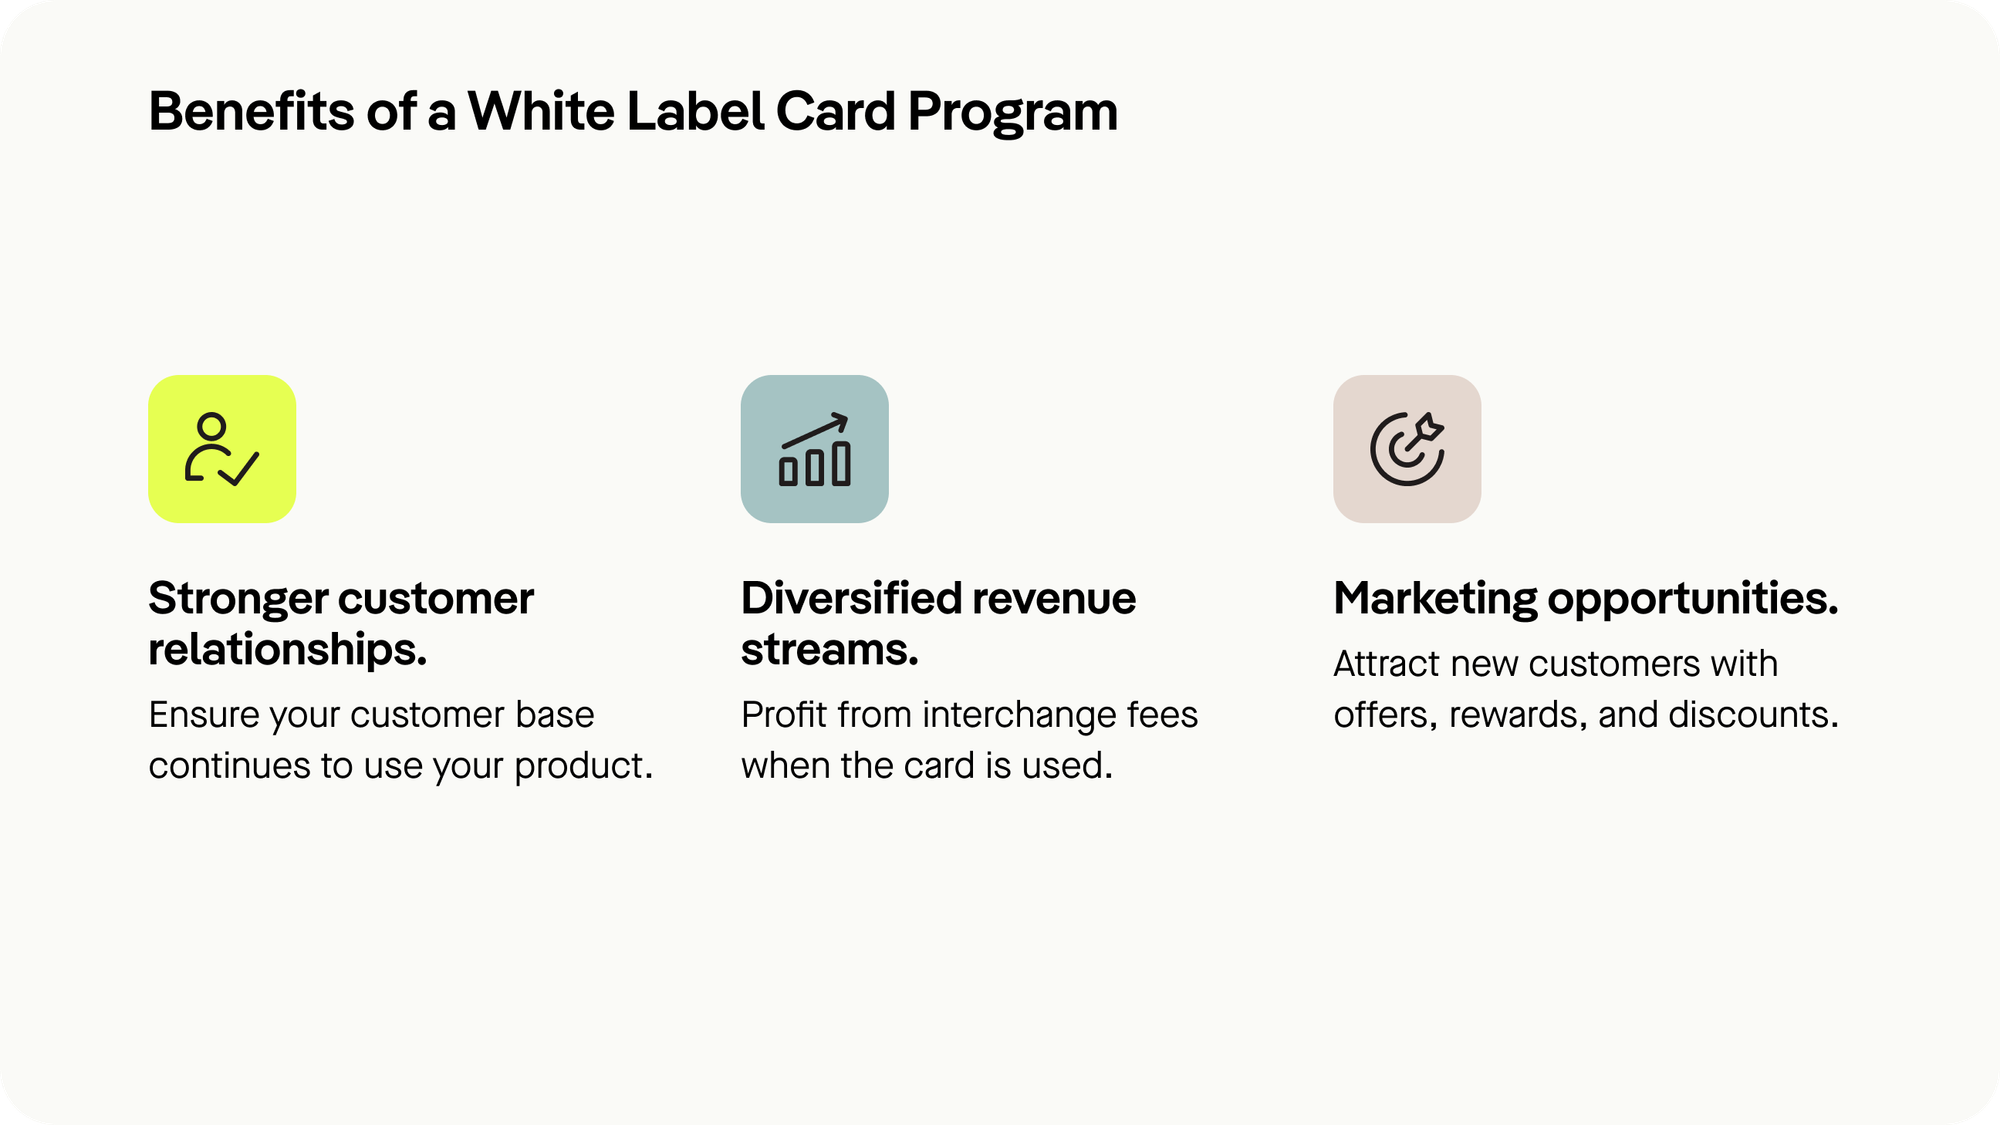 Benefits of a White Label Program